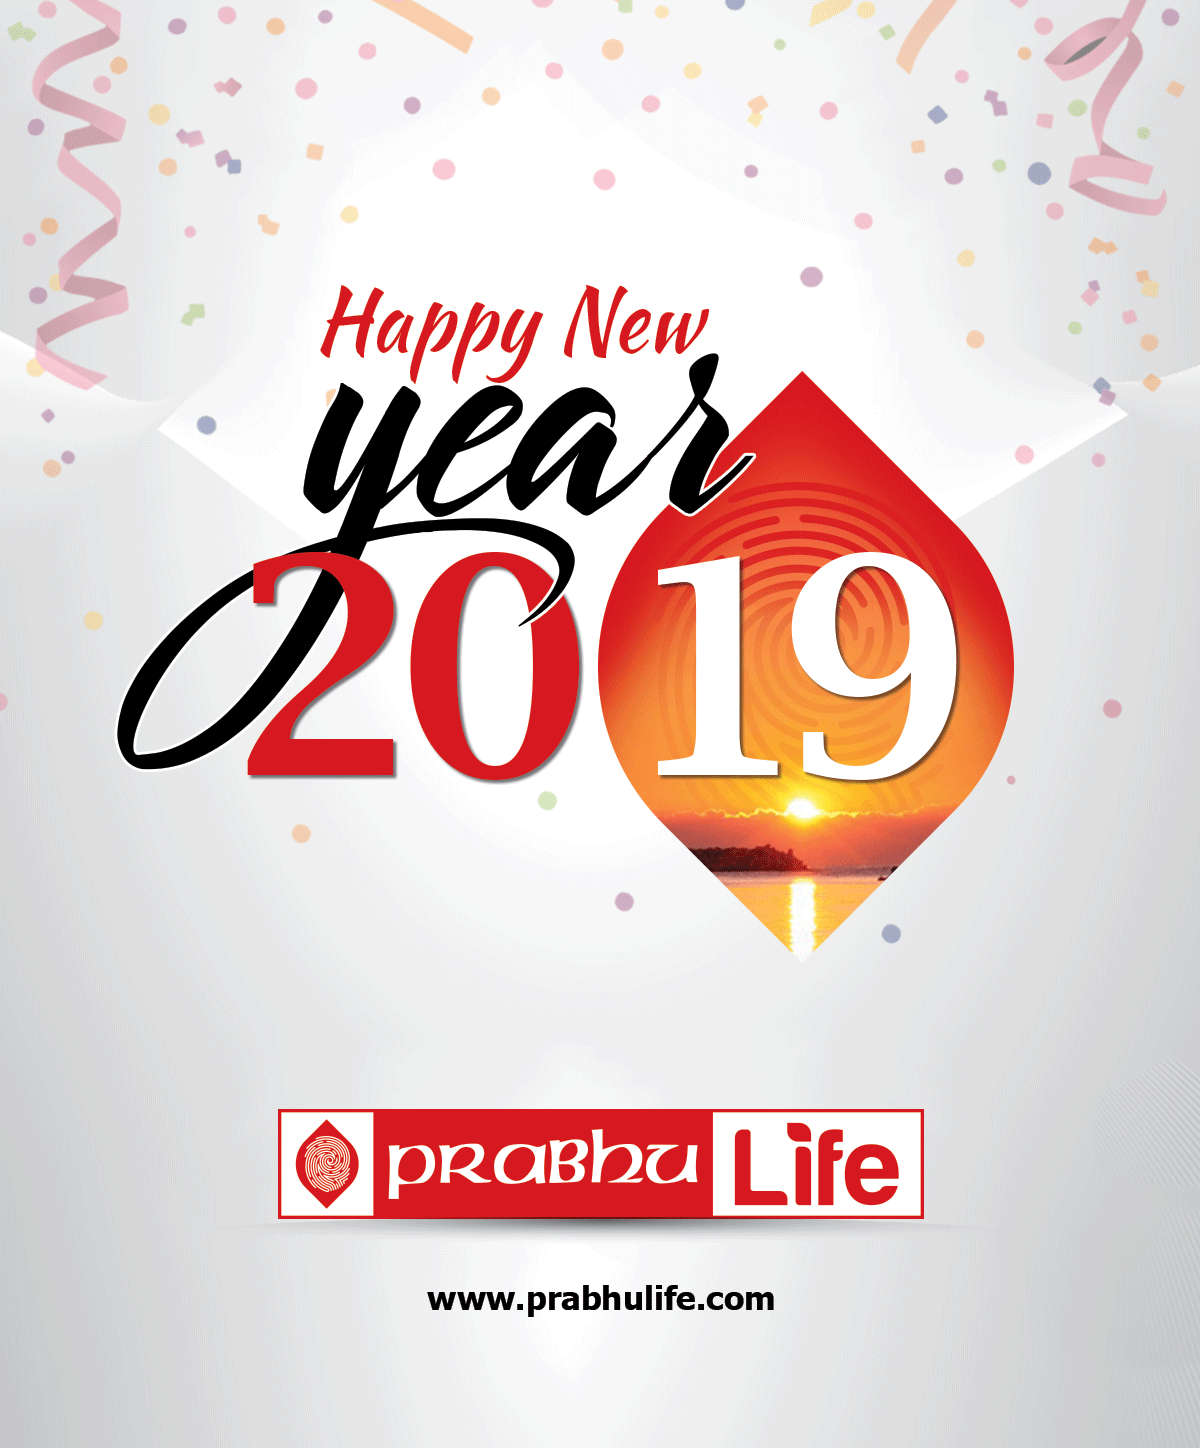 Prabhu Life Insurance wishes you Happy New Year 2019